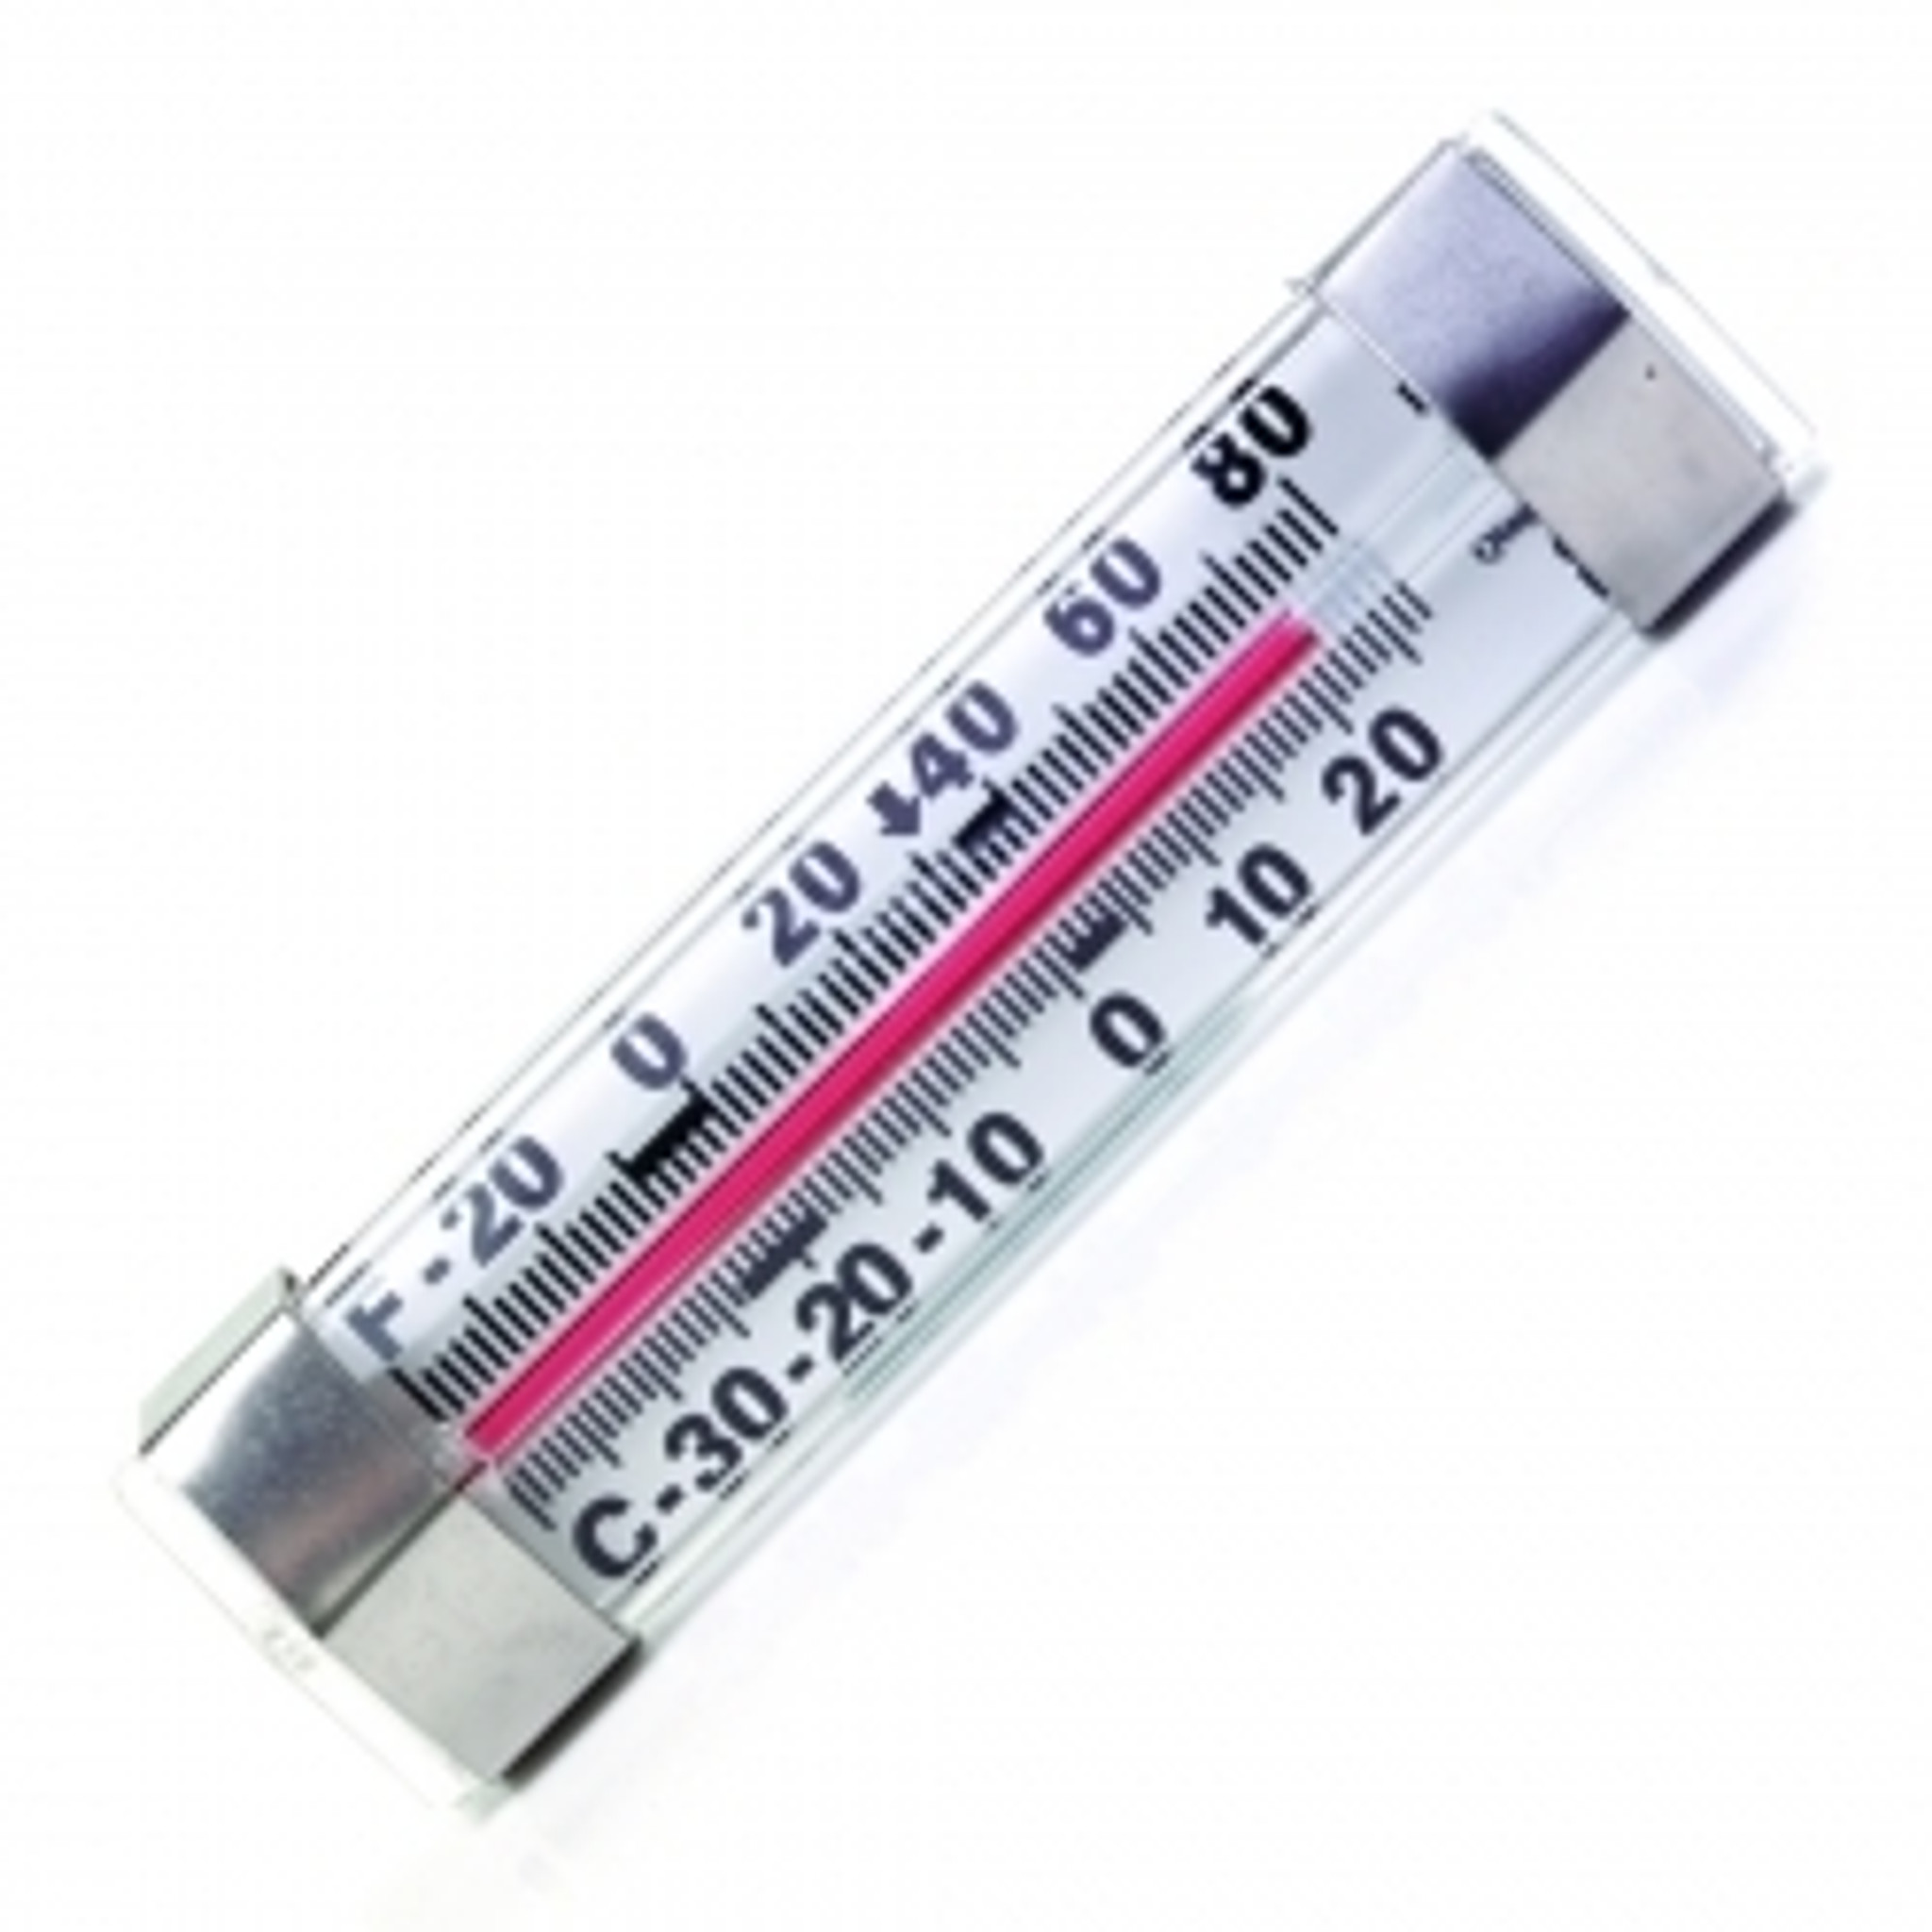 Professional Refrigerator/Freezer Thermometer